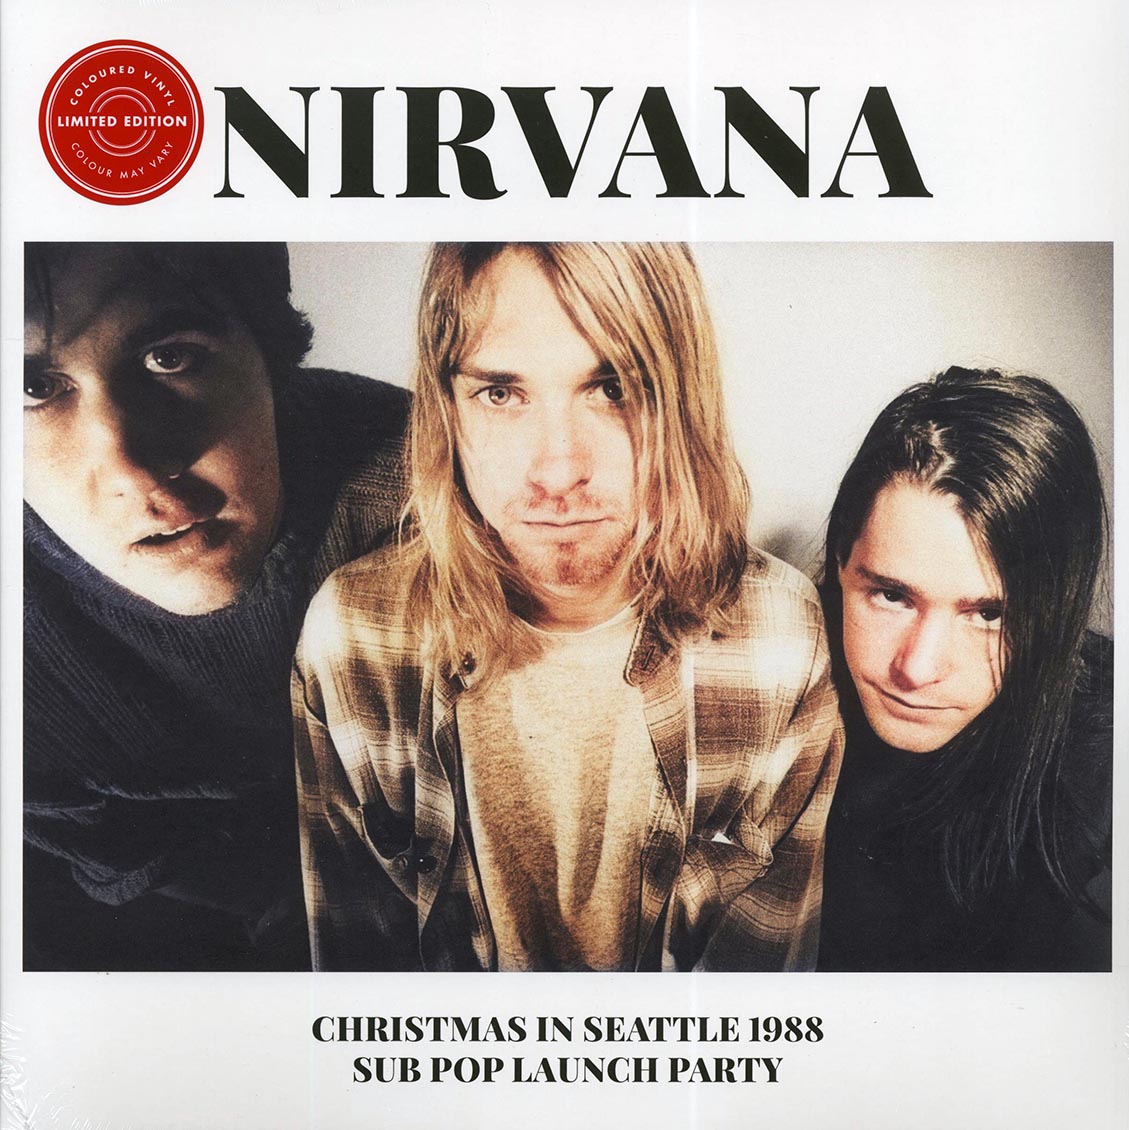 Nirvana - Christmas In Seattle 1988: Sub Pop Launch Party (ltd. ed.) (2xLP) (clear vinyl) - Vinyl LP